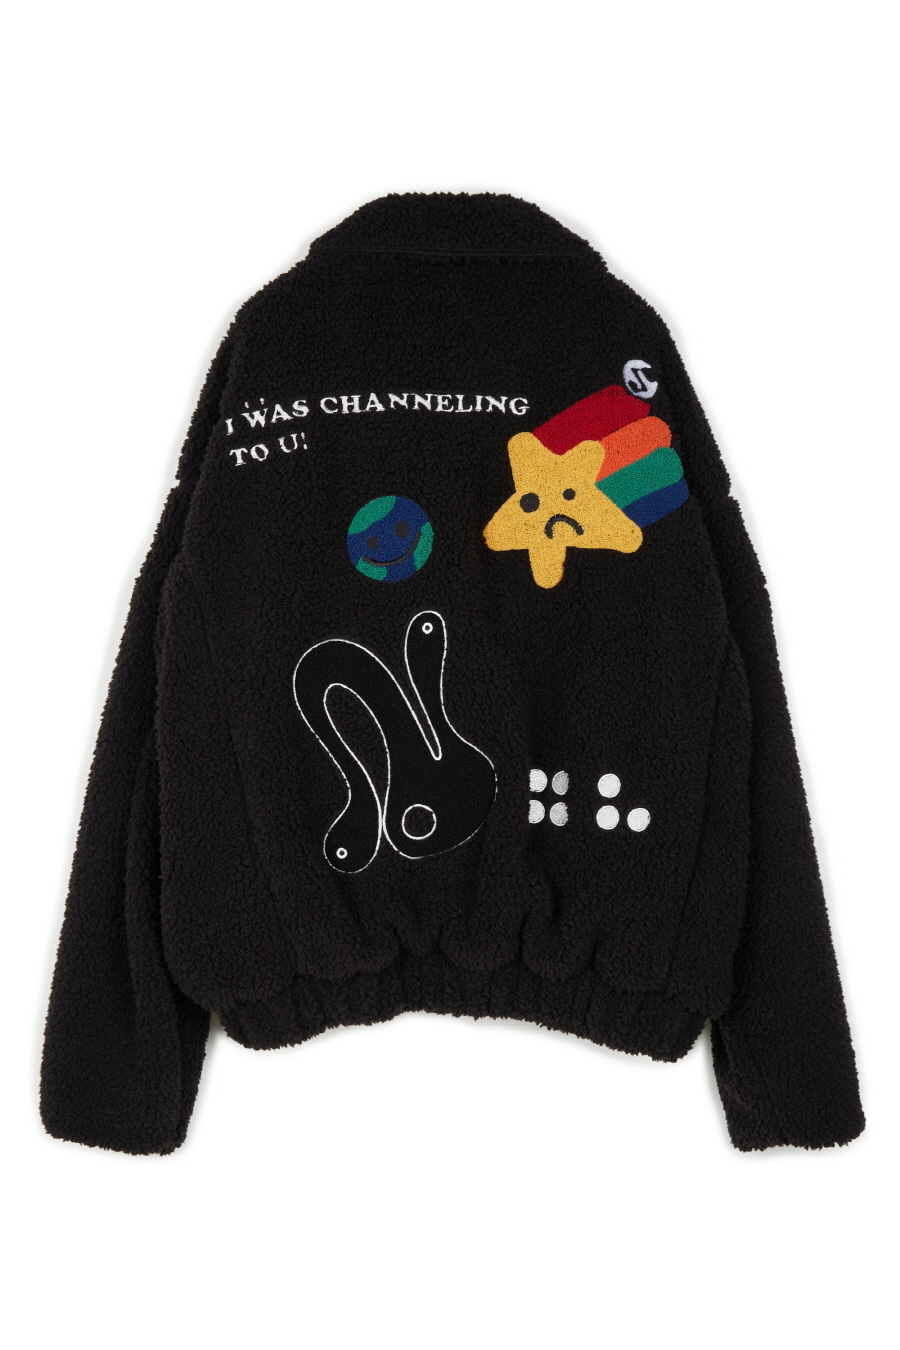 Shooting Star Embroidered Sherpa Fleece Jacket - Black